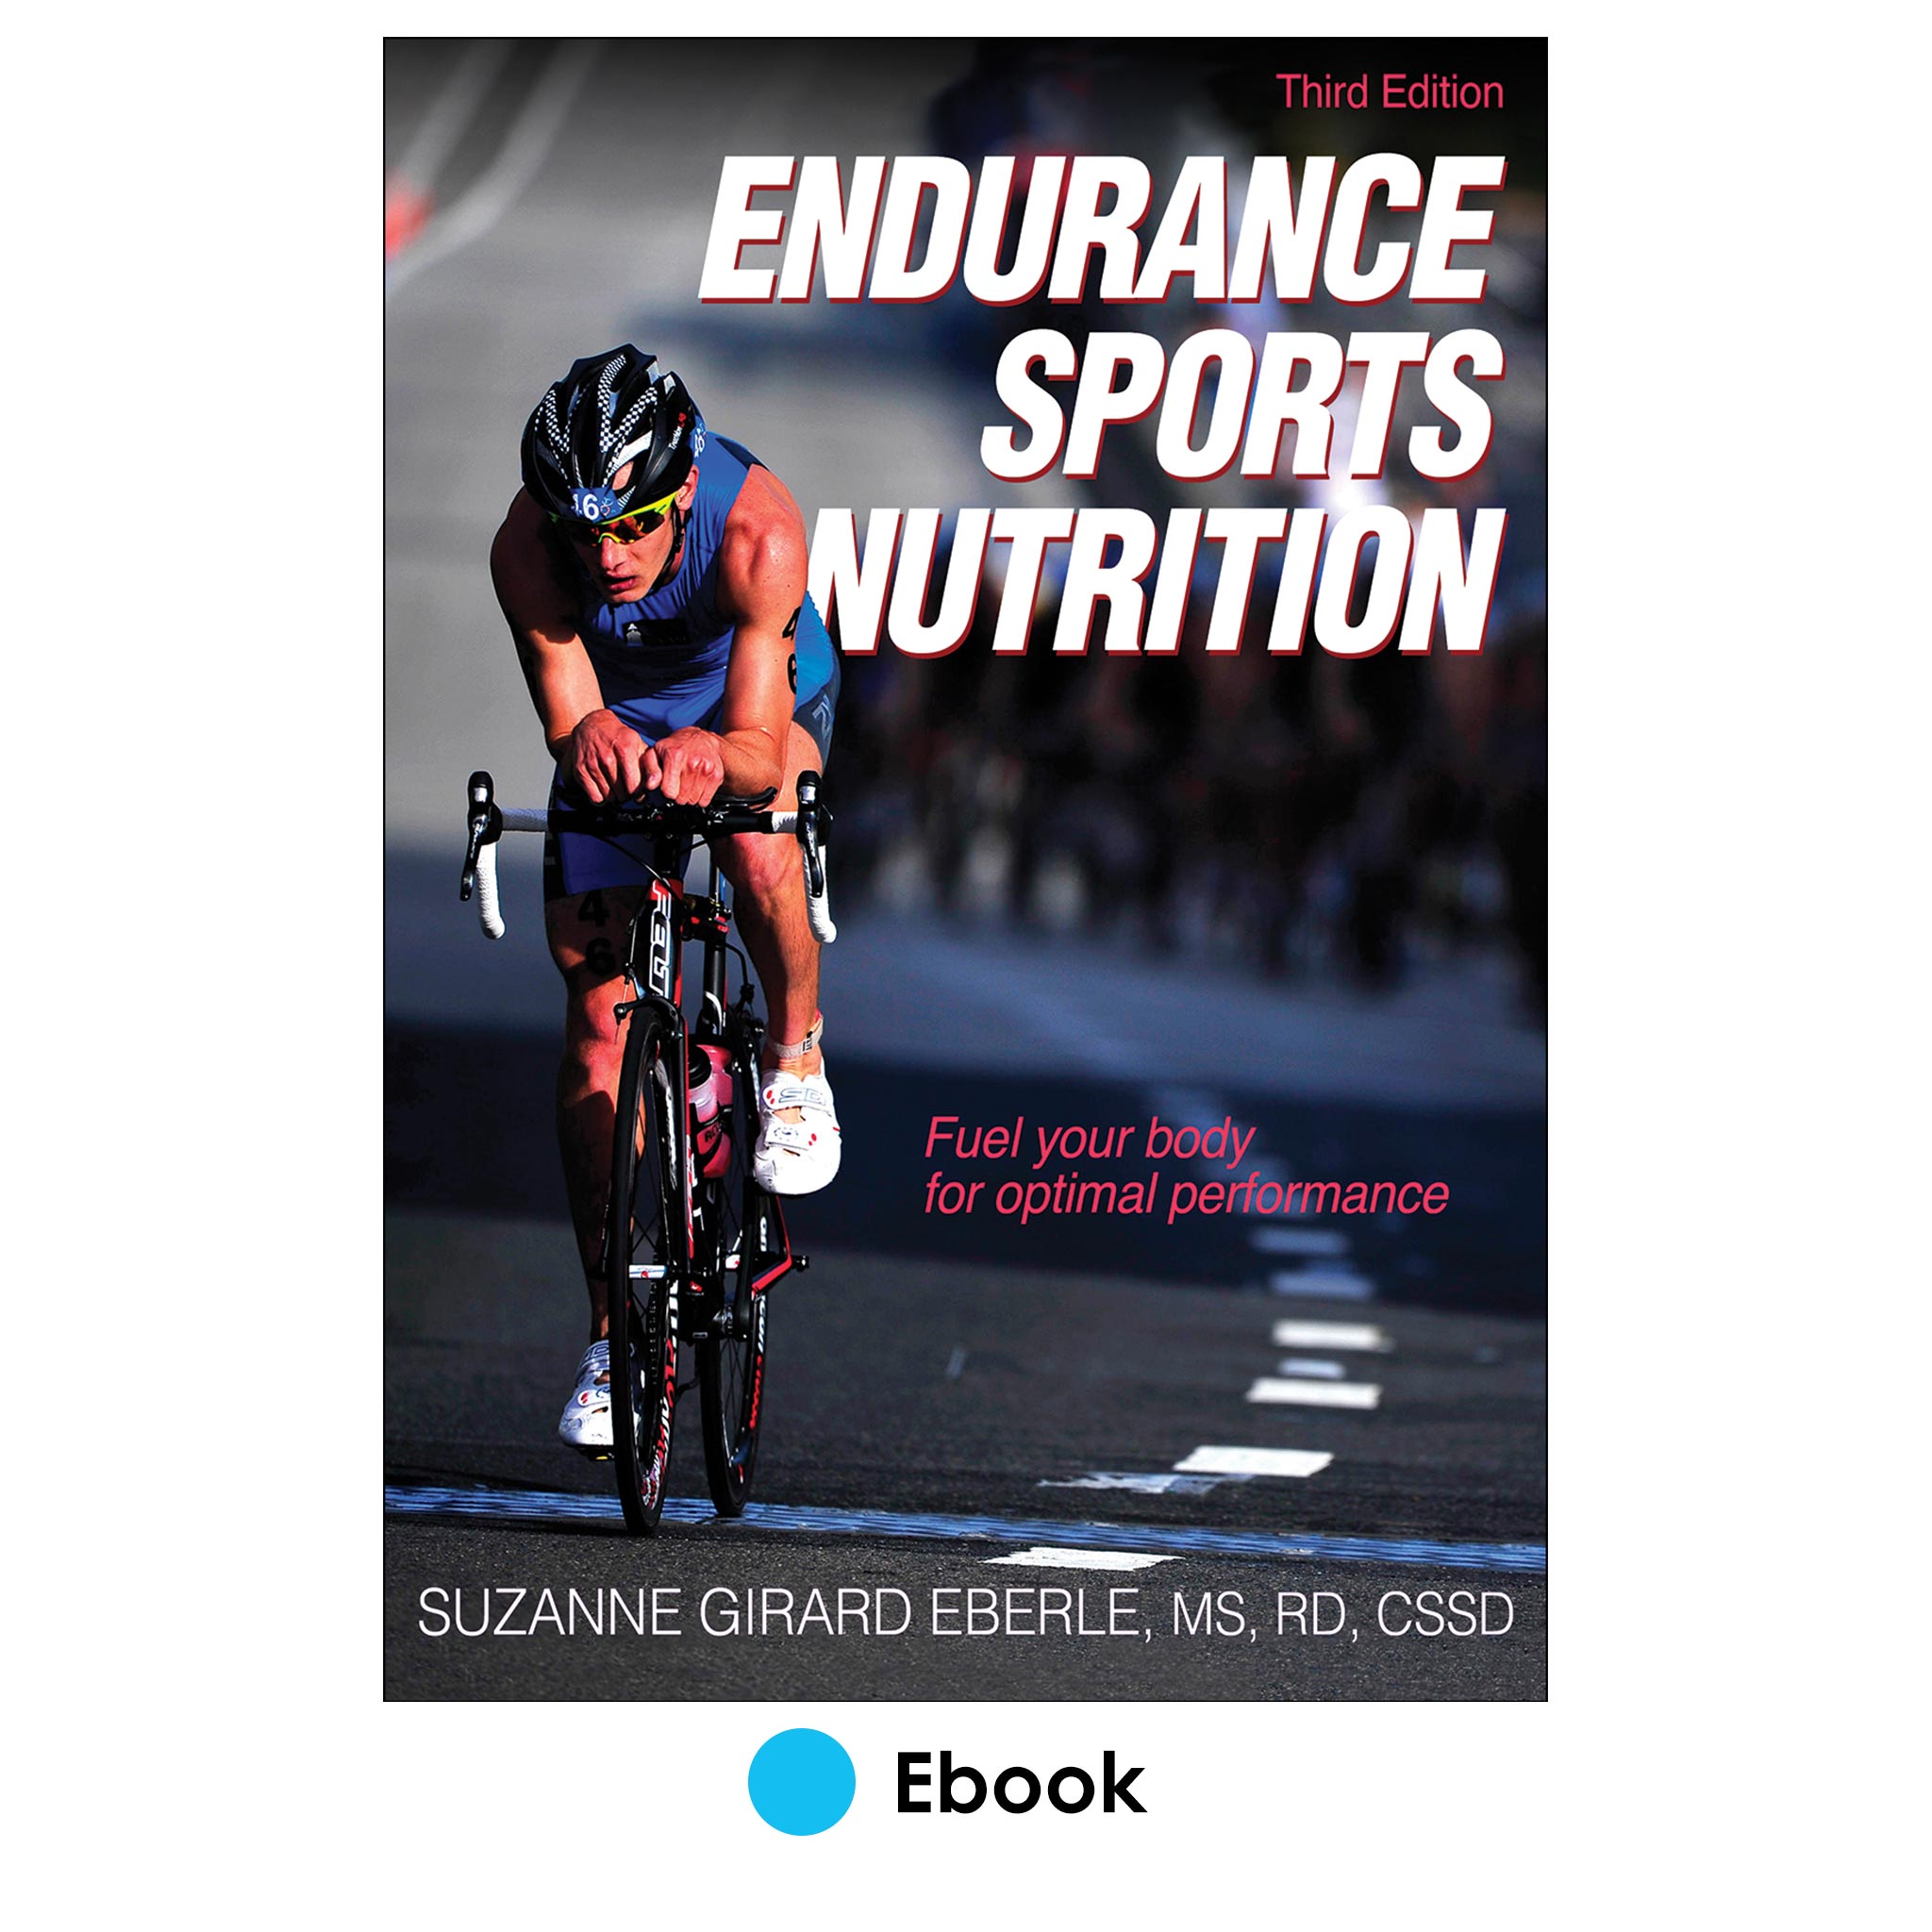 Endurance nutrition for team sports